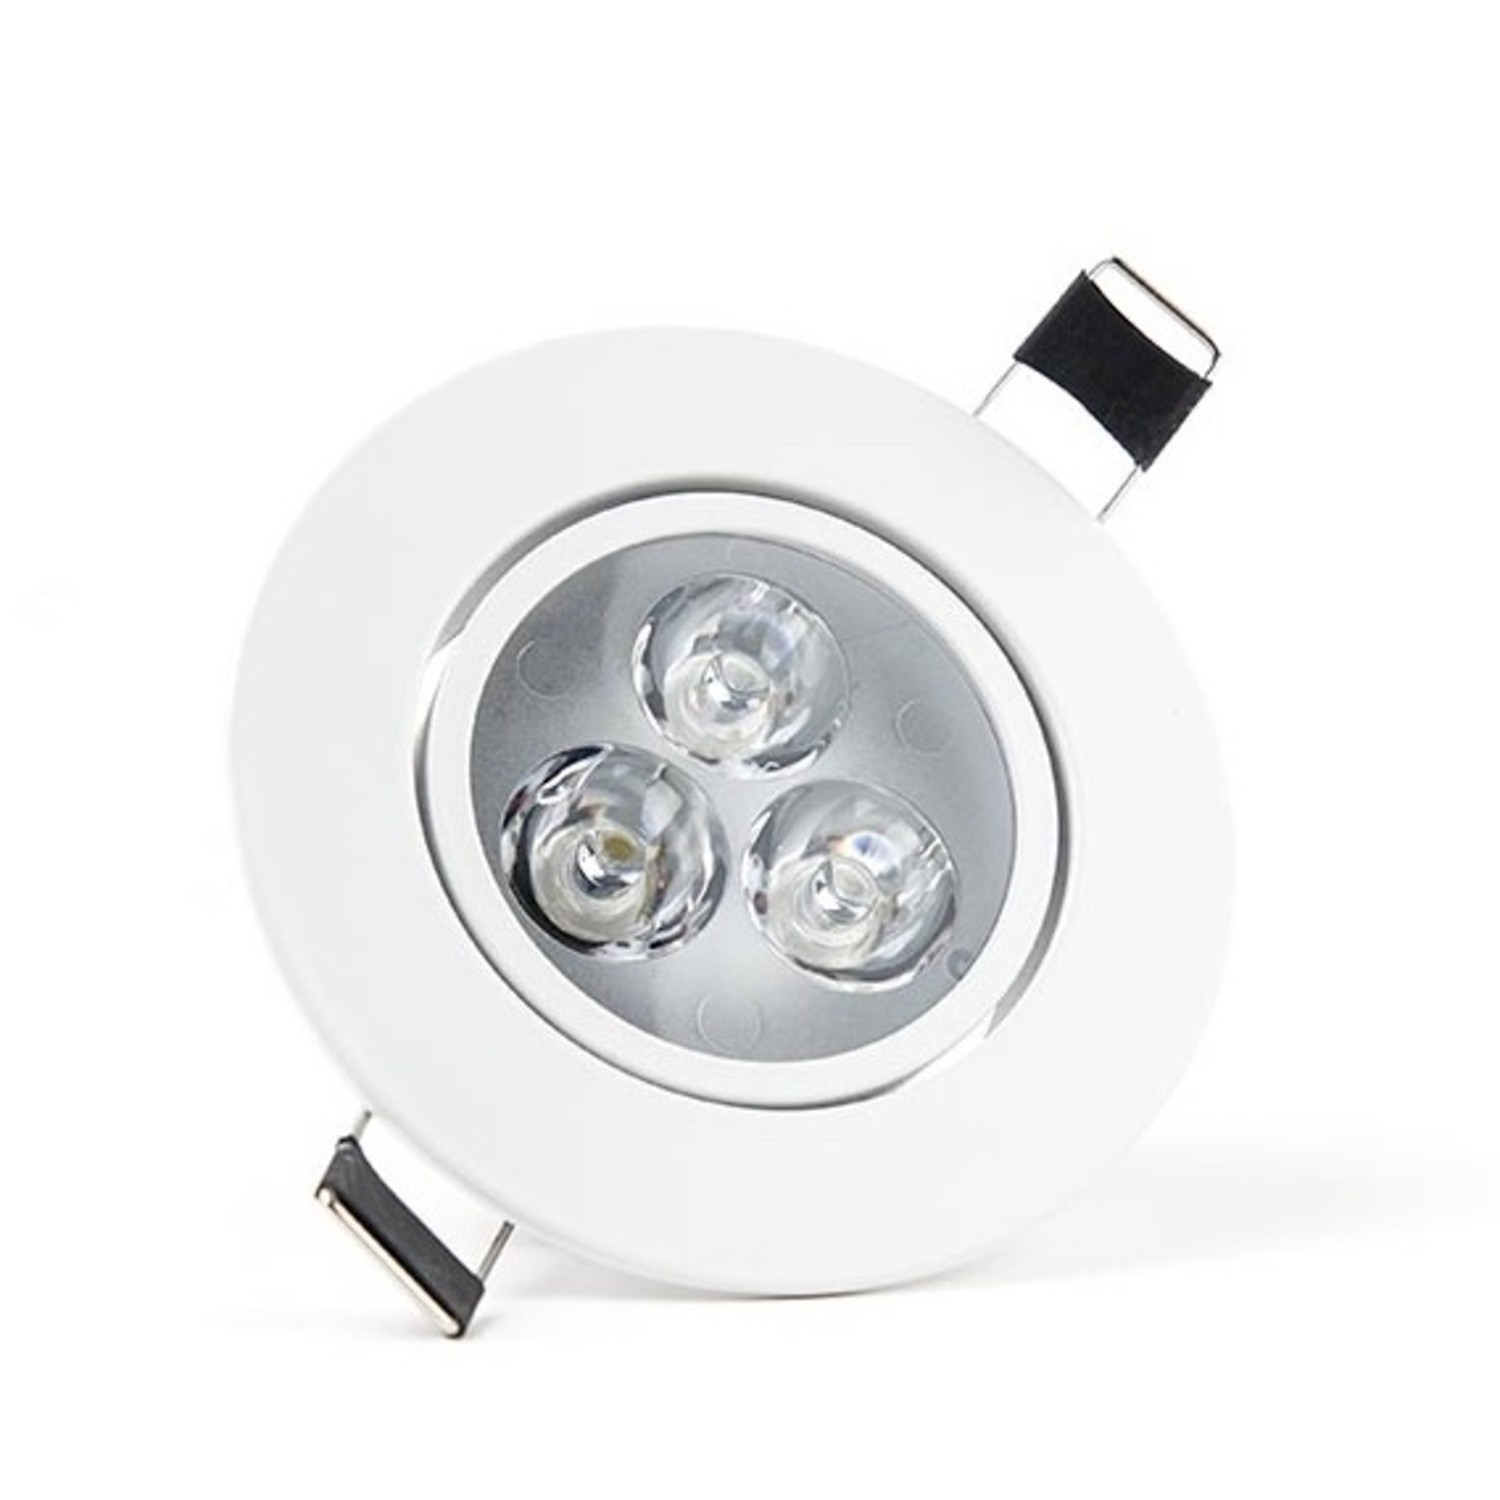 bestellen leren Classificeren LED inbouwspot Dimbaar - 3W vervangt 25W - 2700K warm wit licht - Kant -  Ledlichtdiscounter.nl